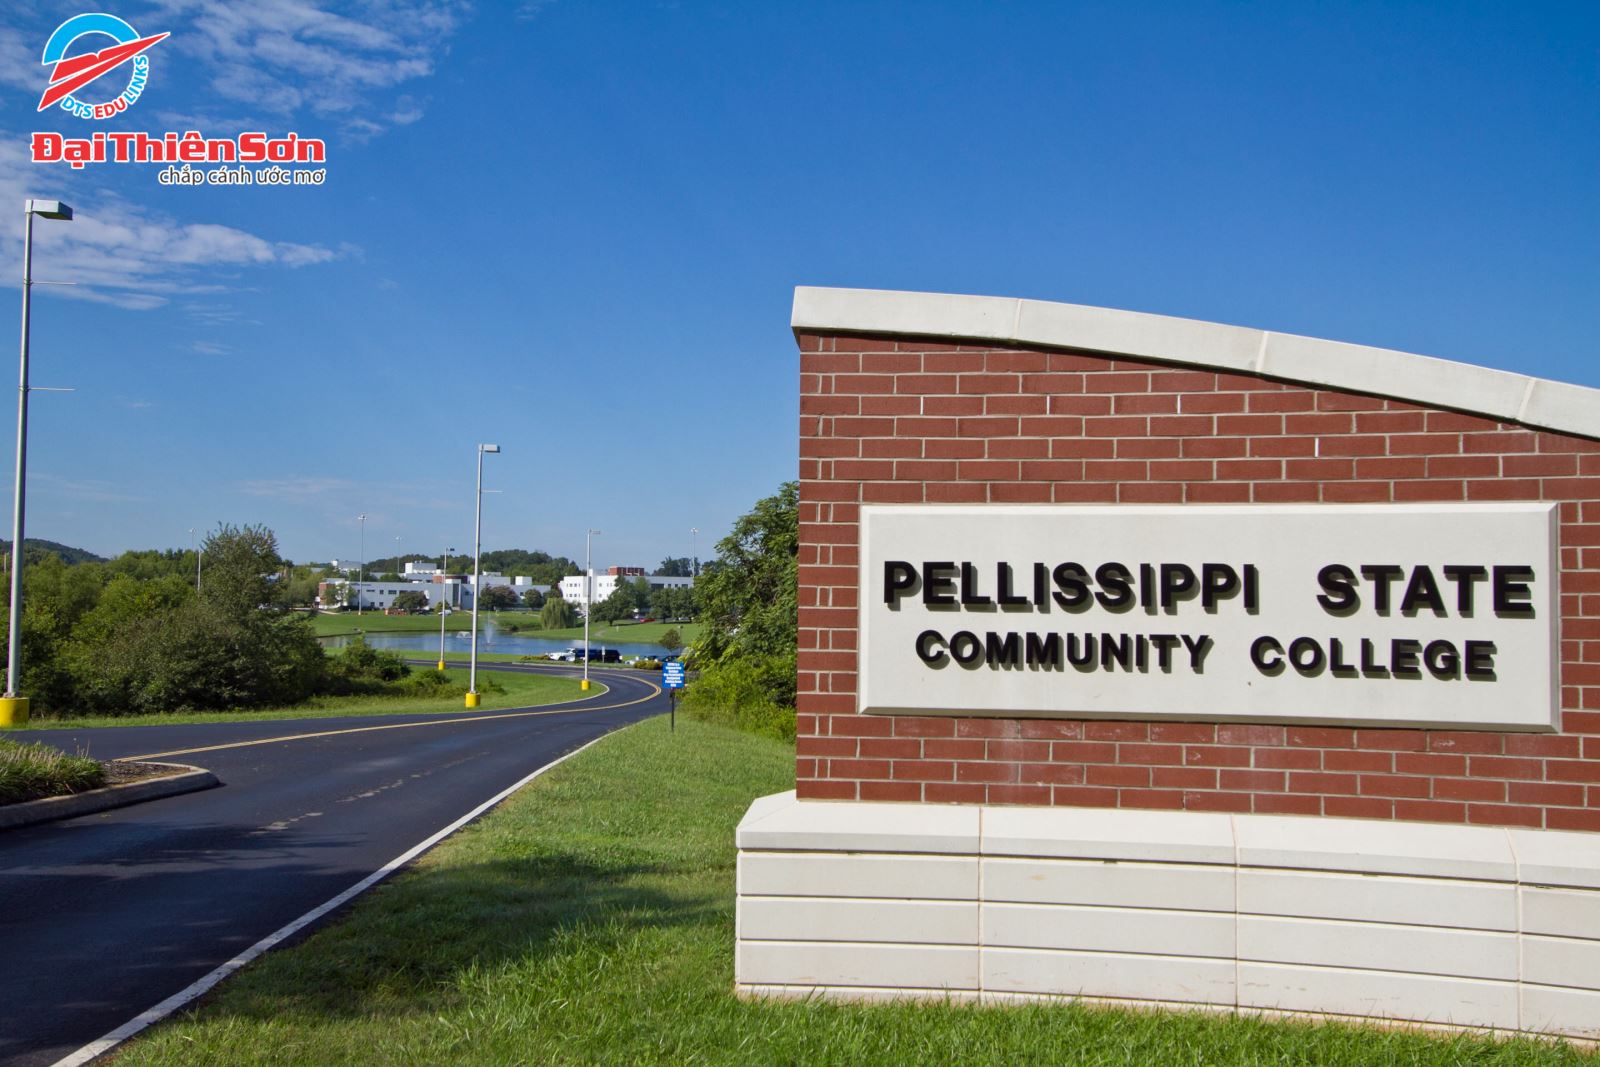 PELLISSIPPI STATE COMMUNITY COLLEGE